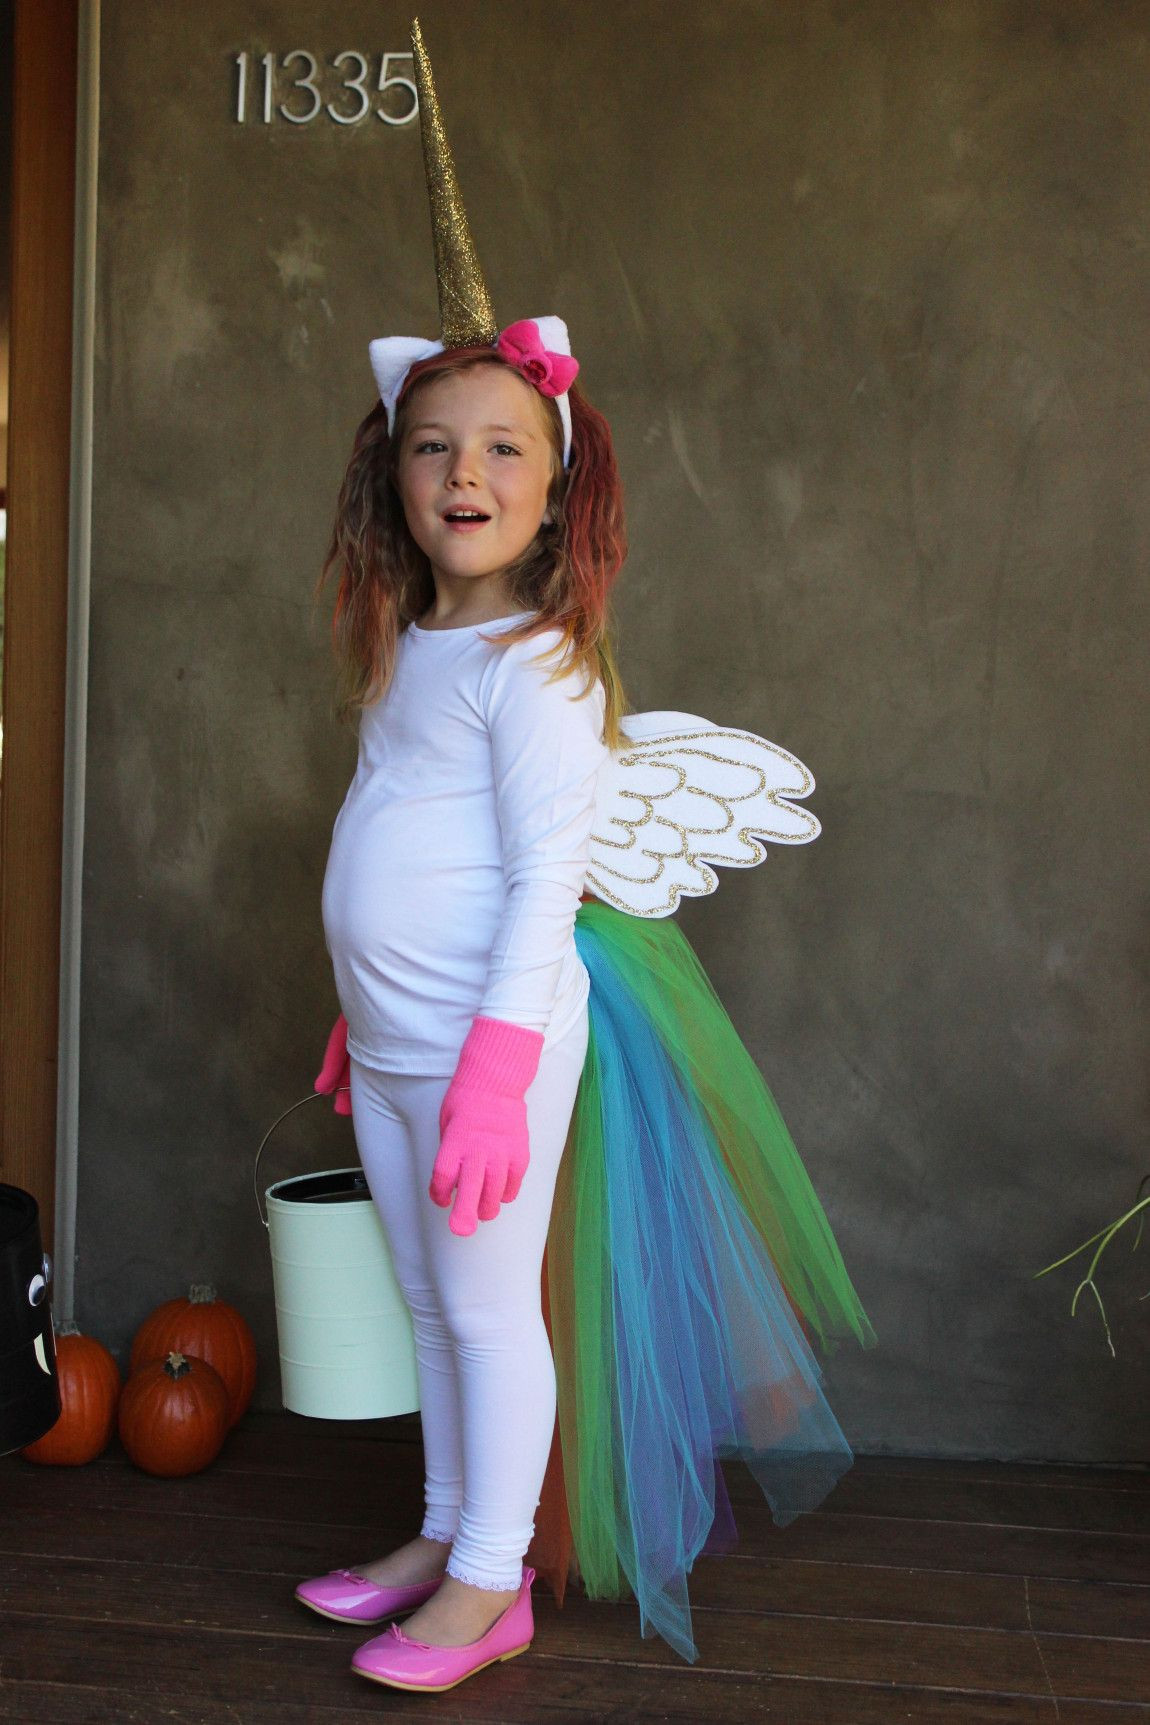 DIY Halloween Costumes For Toddler Girls
 50 Best DIY Halloween Costumes For Kids in 2017